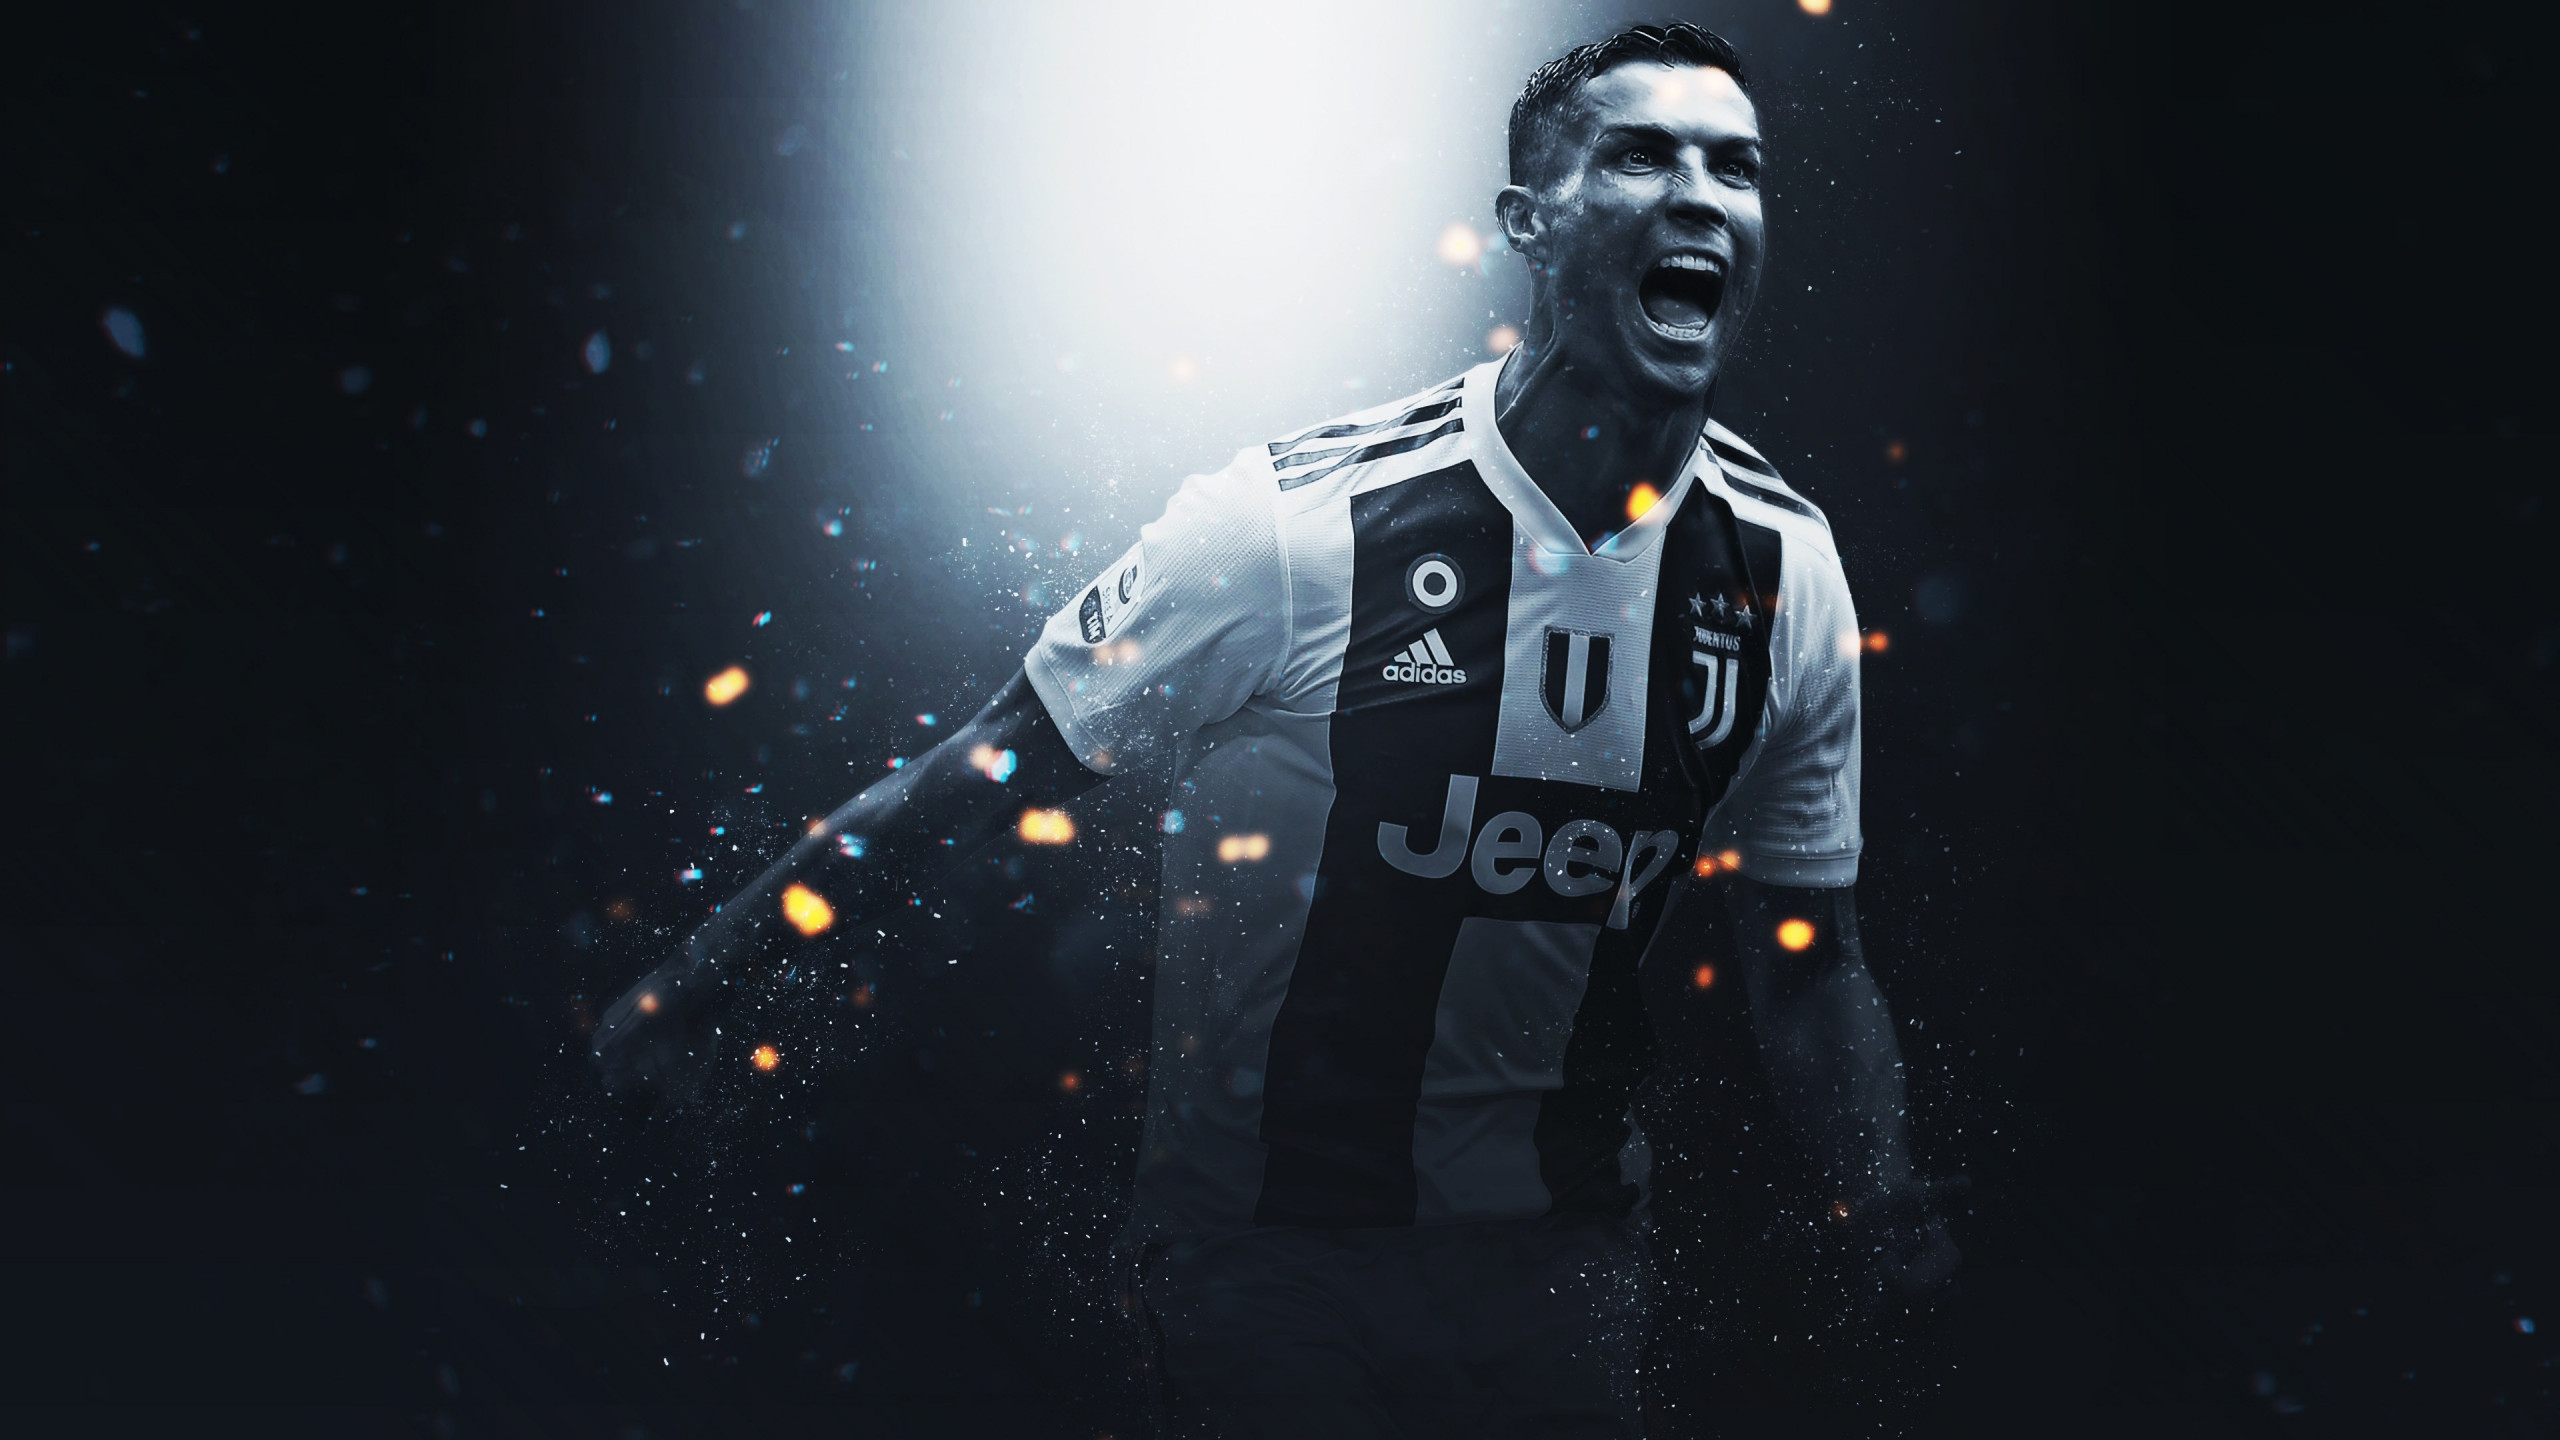 Cristiano Ronaldo at Juventus wallpaper 2560x1440